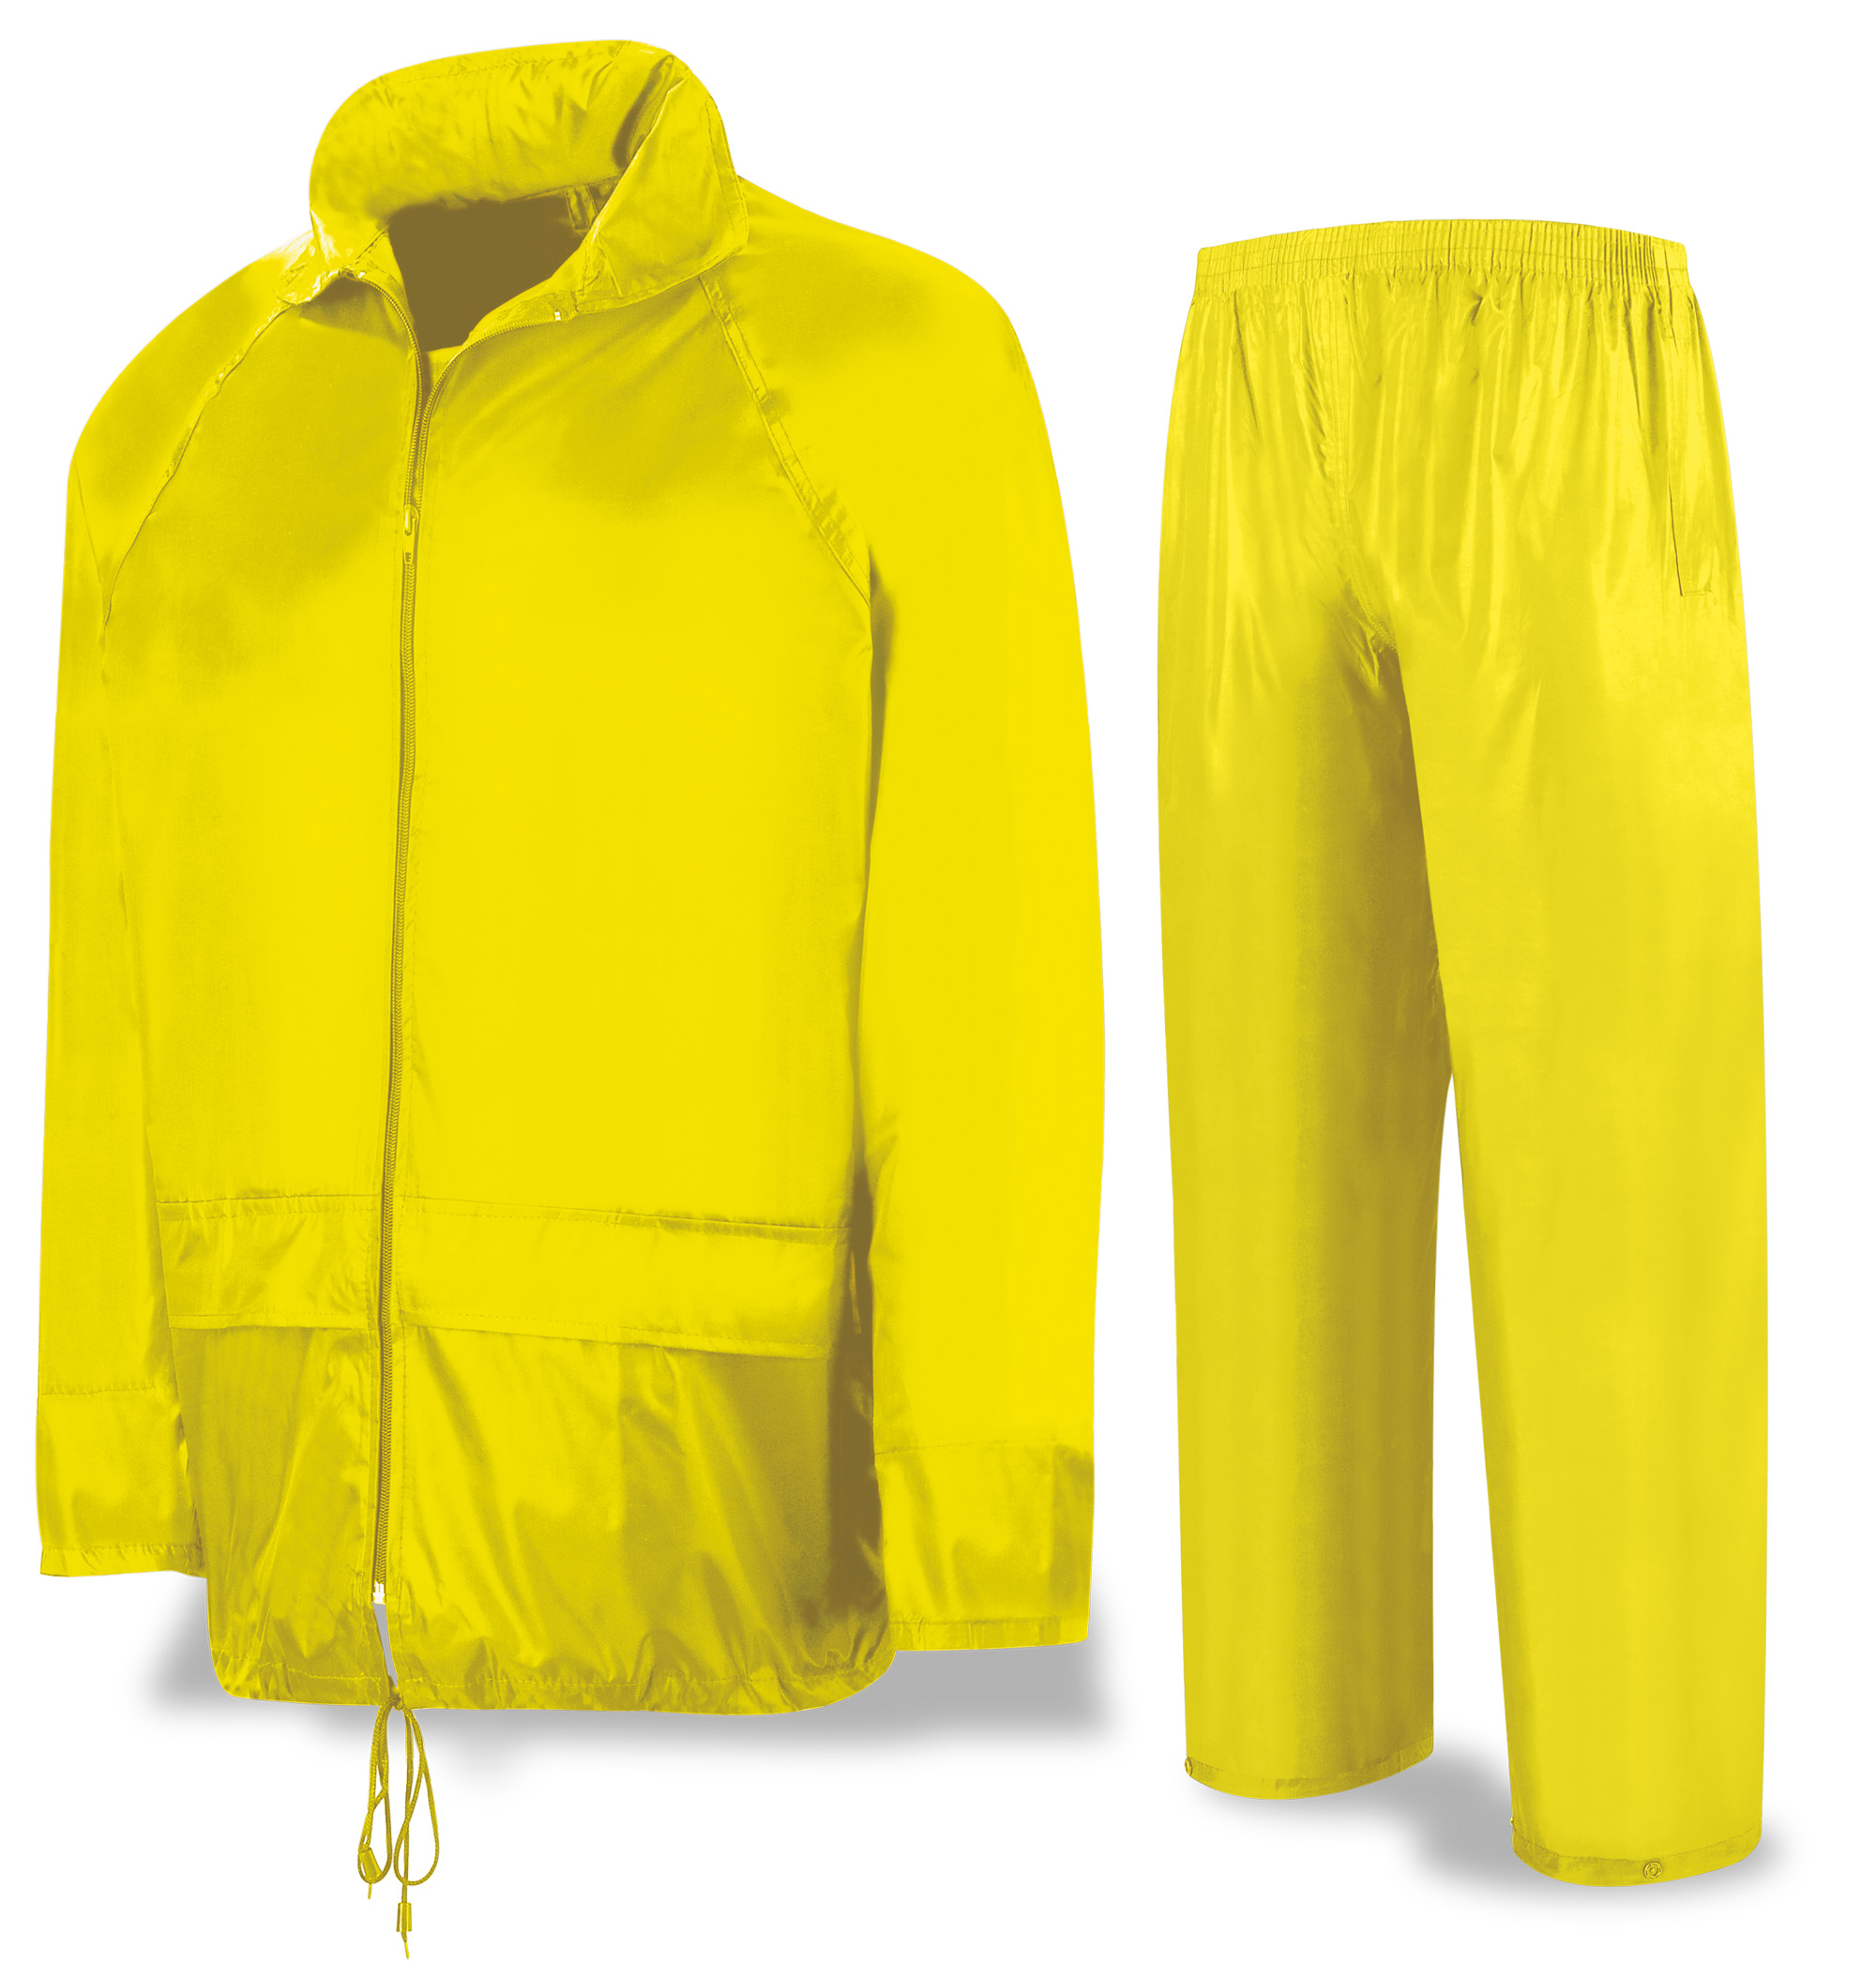 188-TAIY Coats and Rain Gear Rain Gear Water suit. ENGINEER. Yellow